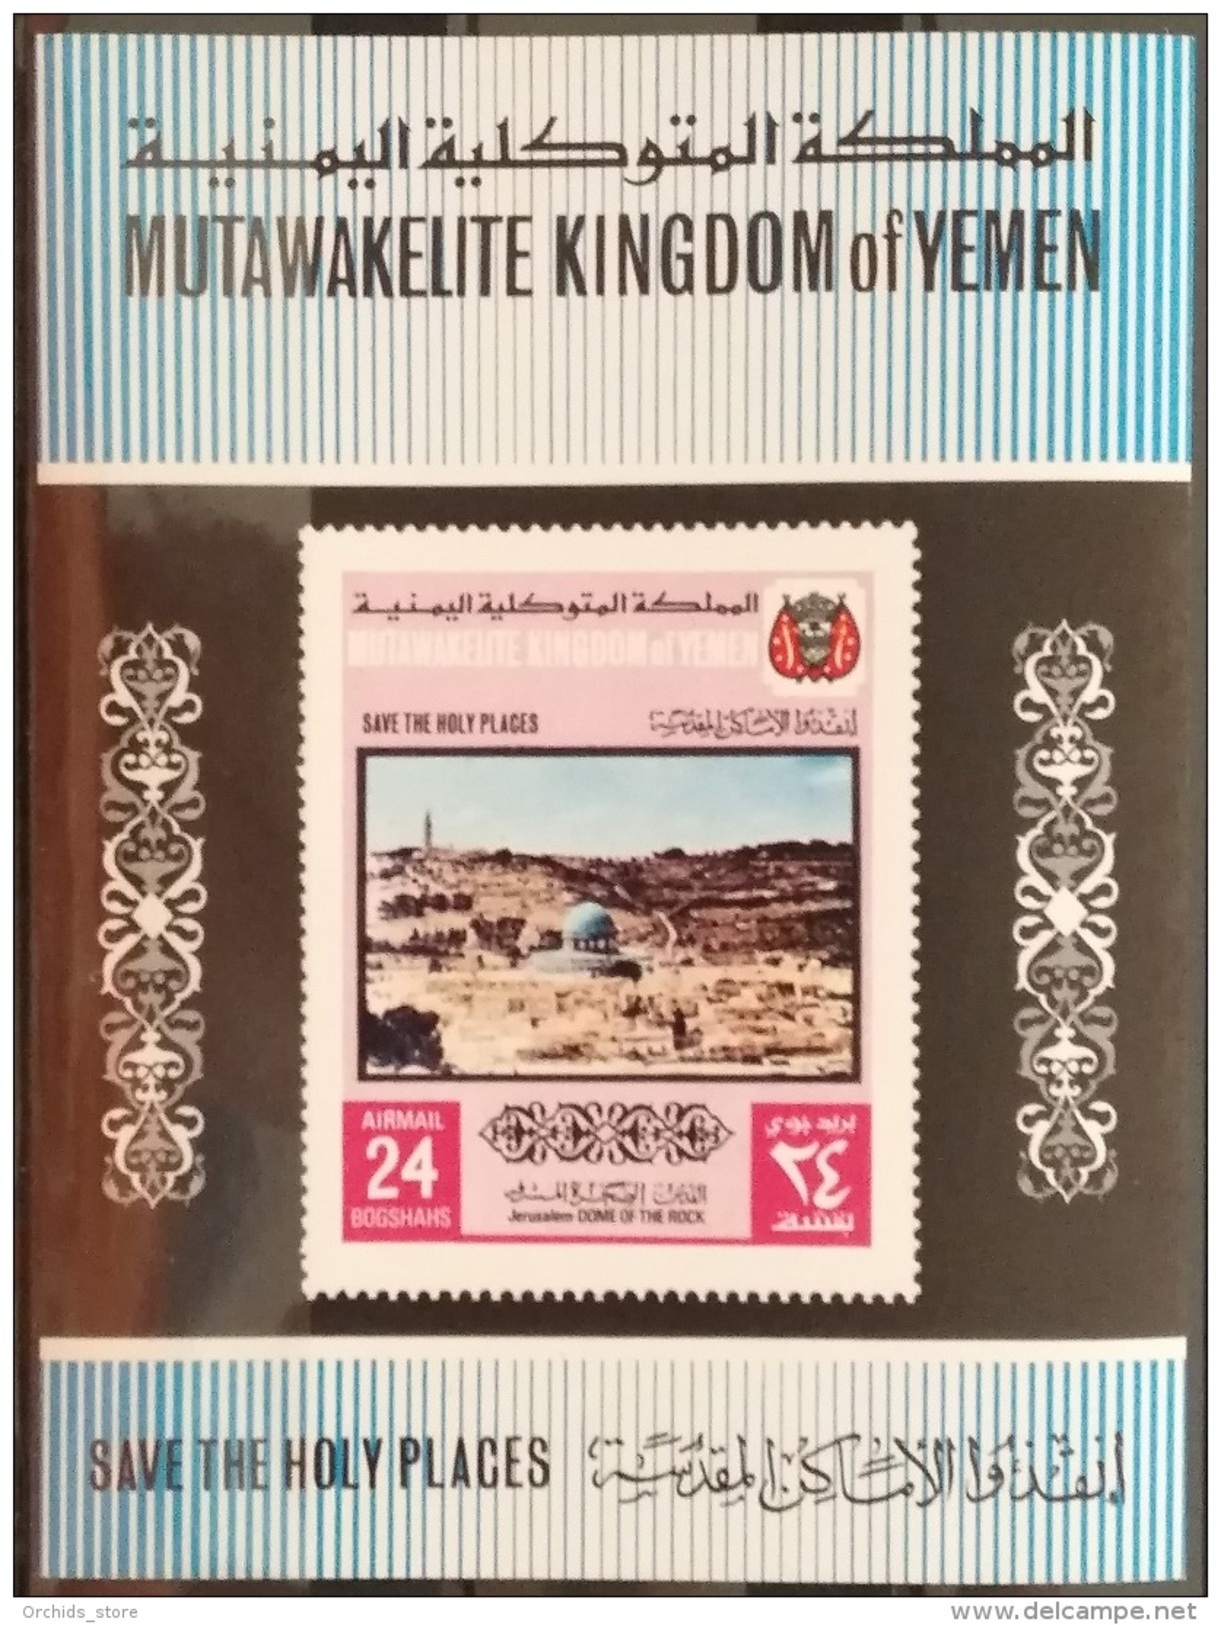 TS29 - Yemen Kingdom  1969 Mi. Block 169 MNH S/S - Save The Holy Places, Palestine - Yemen